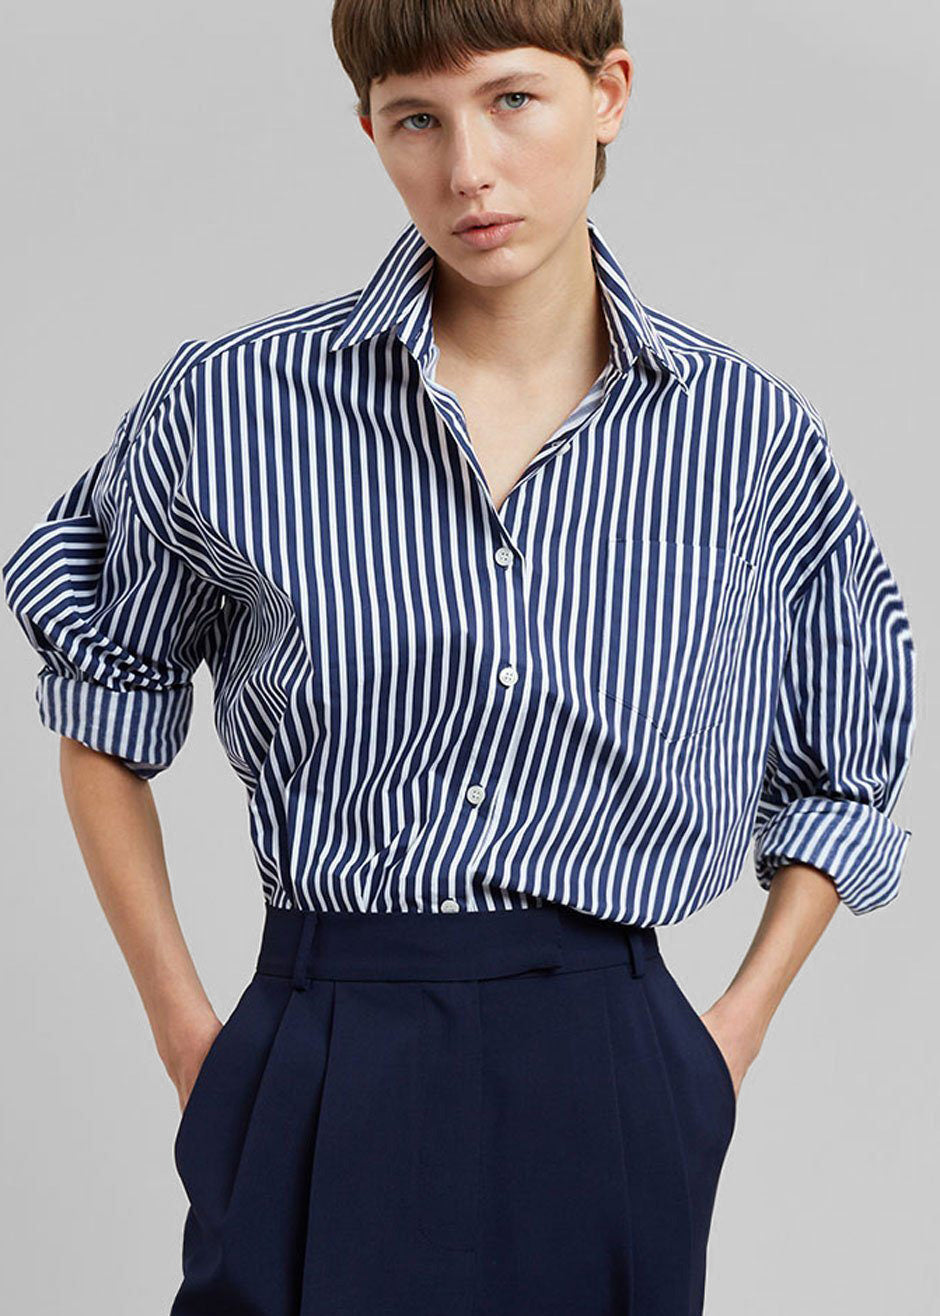 Melody Cotton Shirt - Navy Stripe - 1